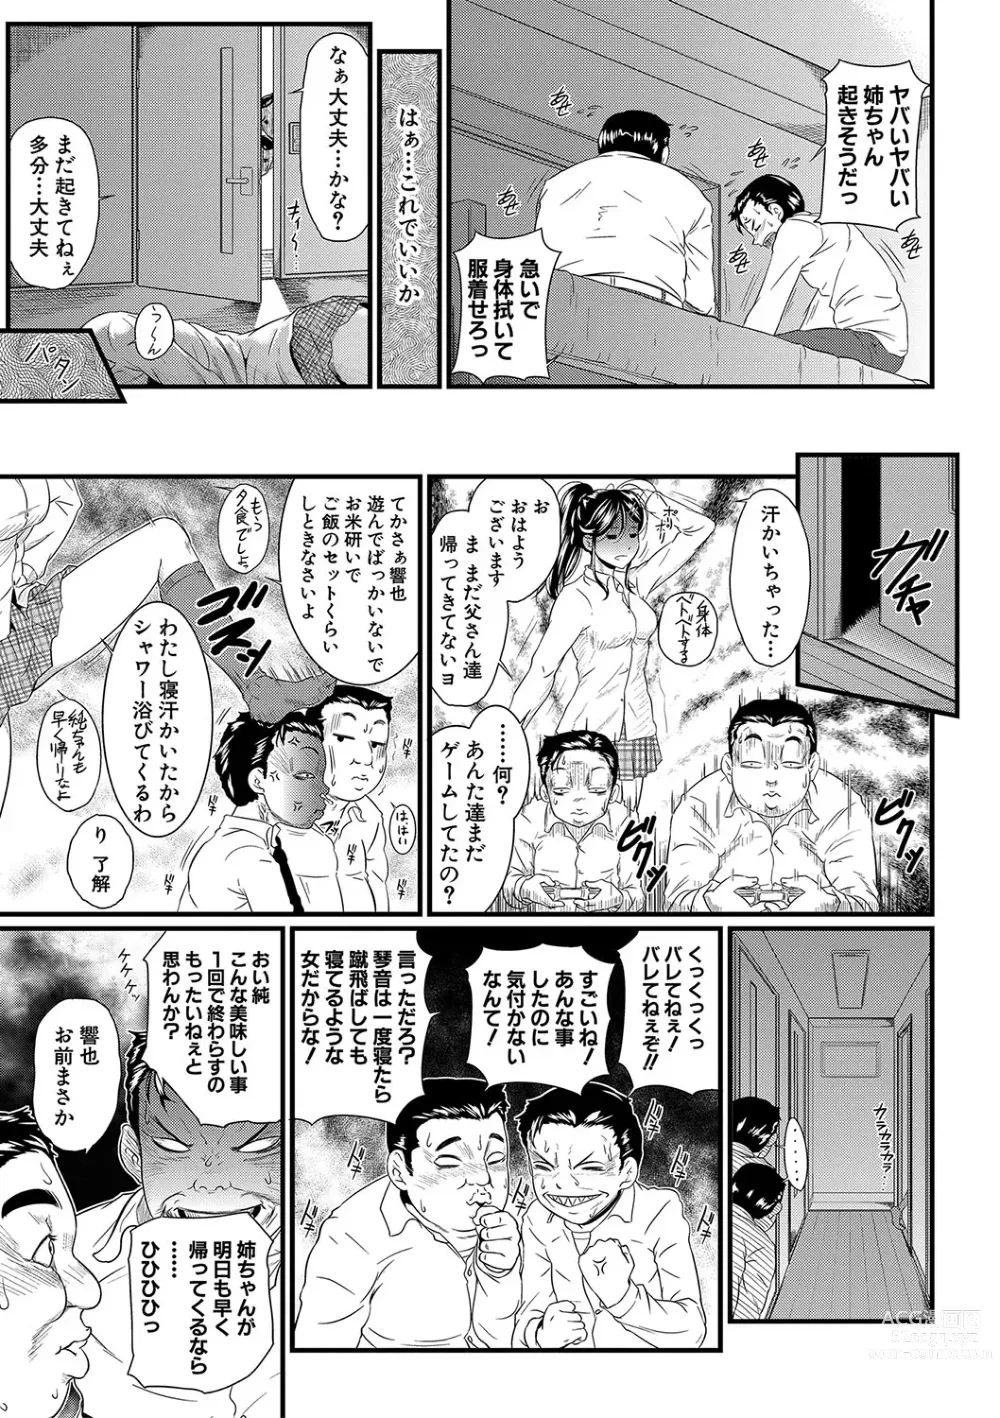 Page 14 of manga 睡眠姦淫